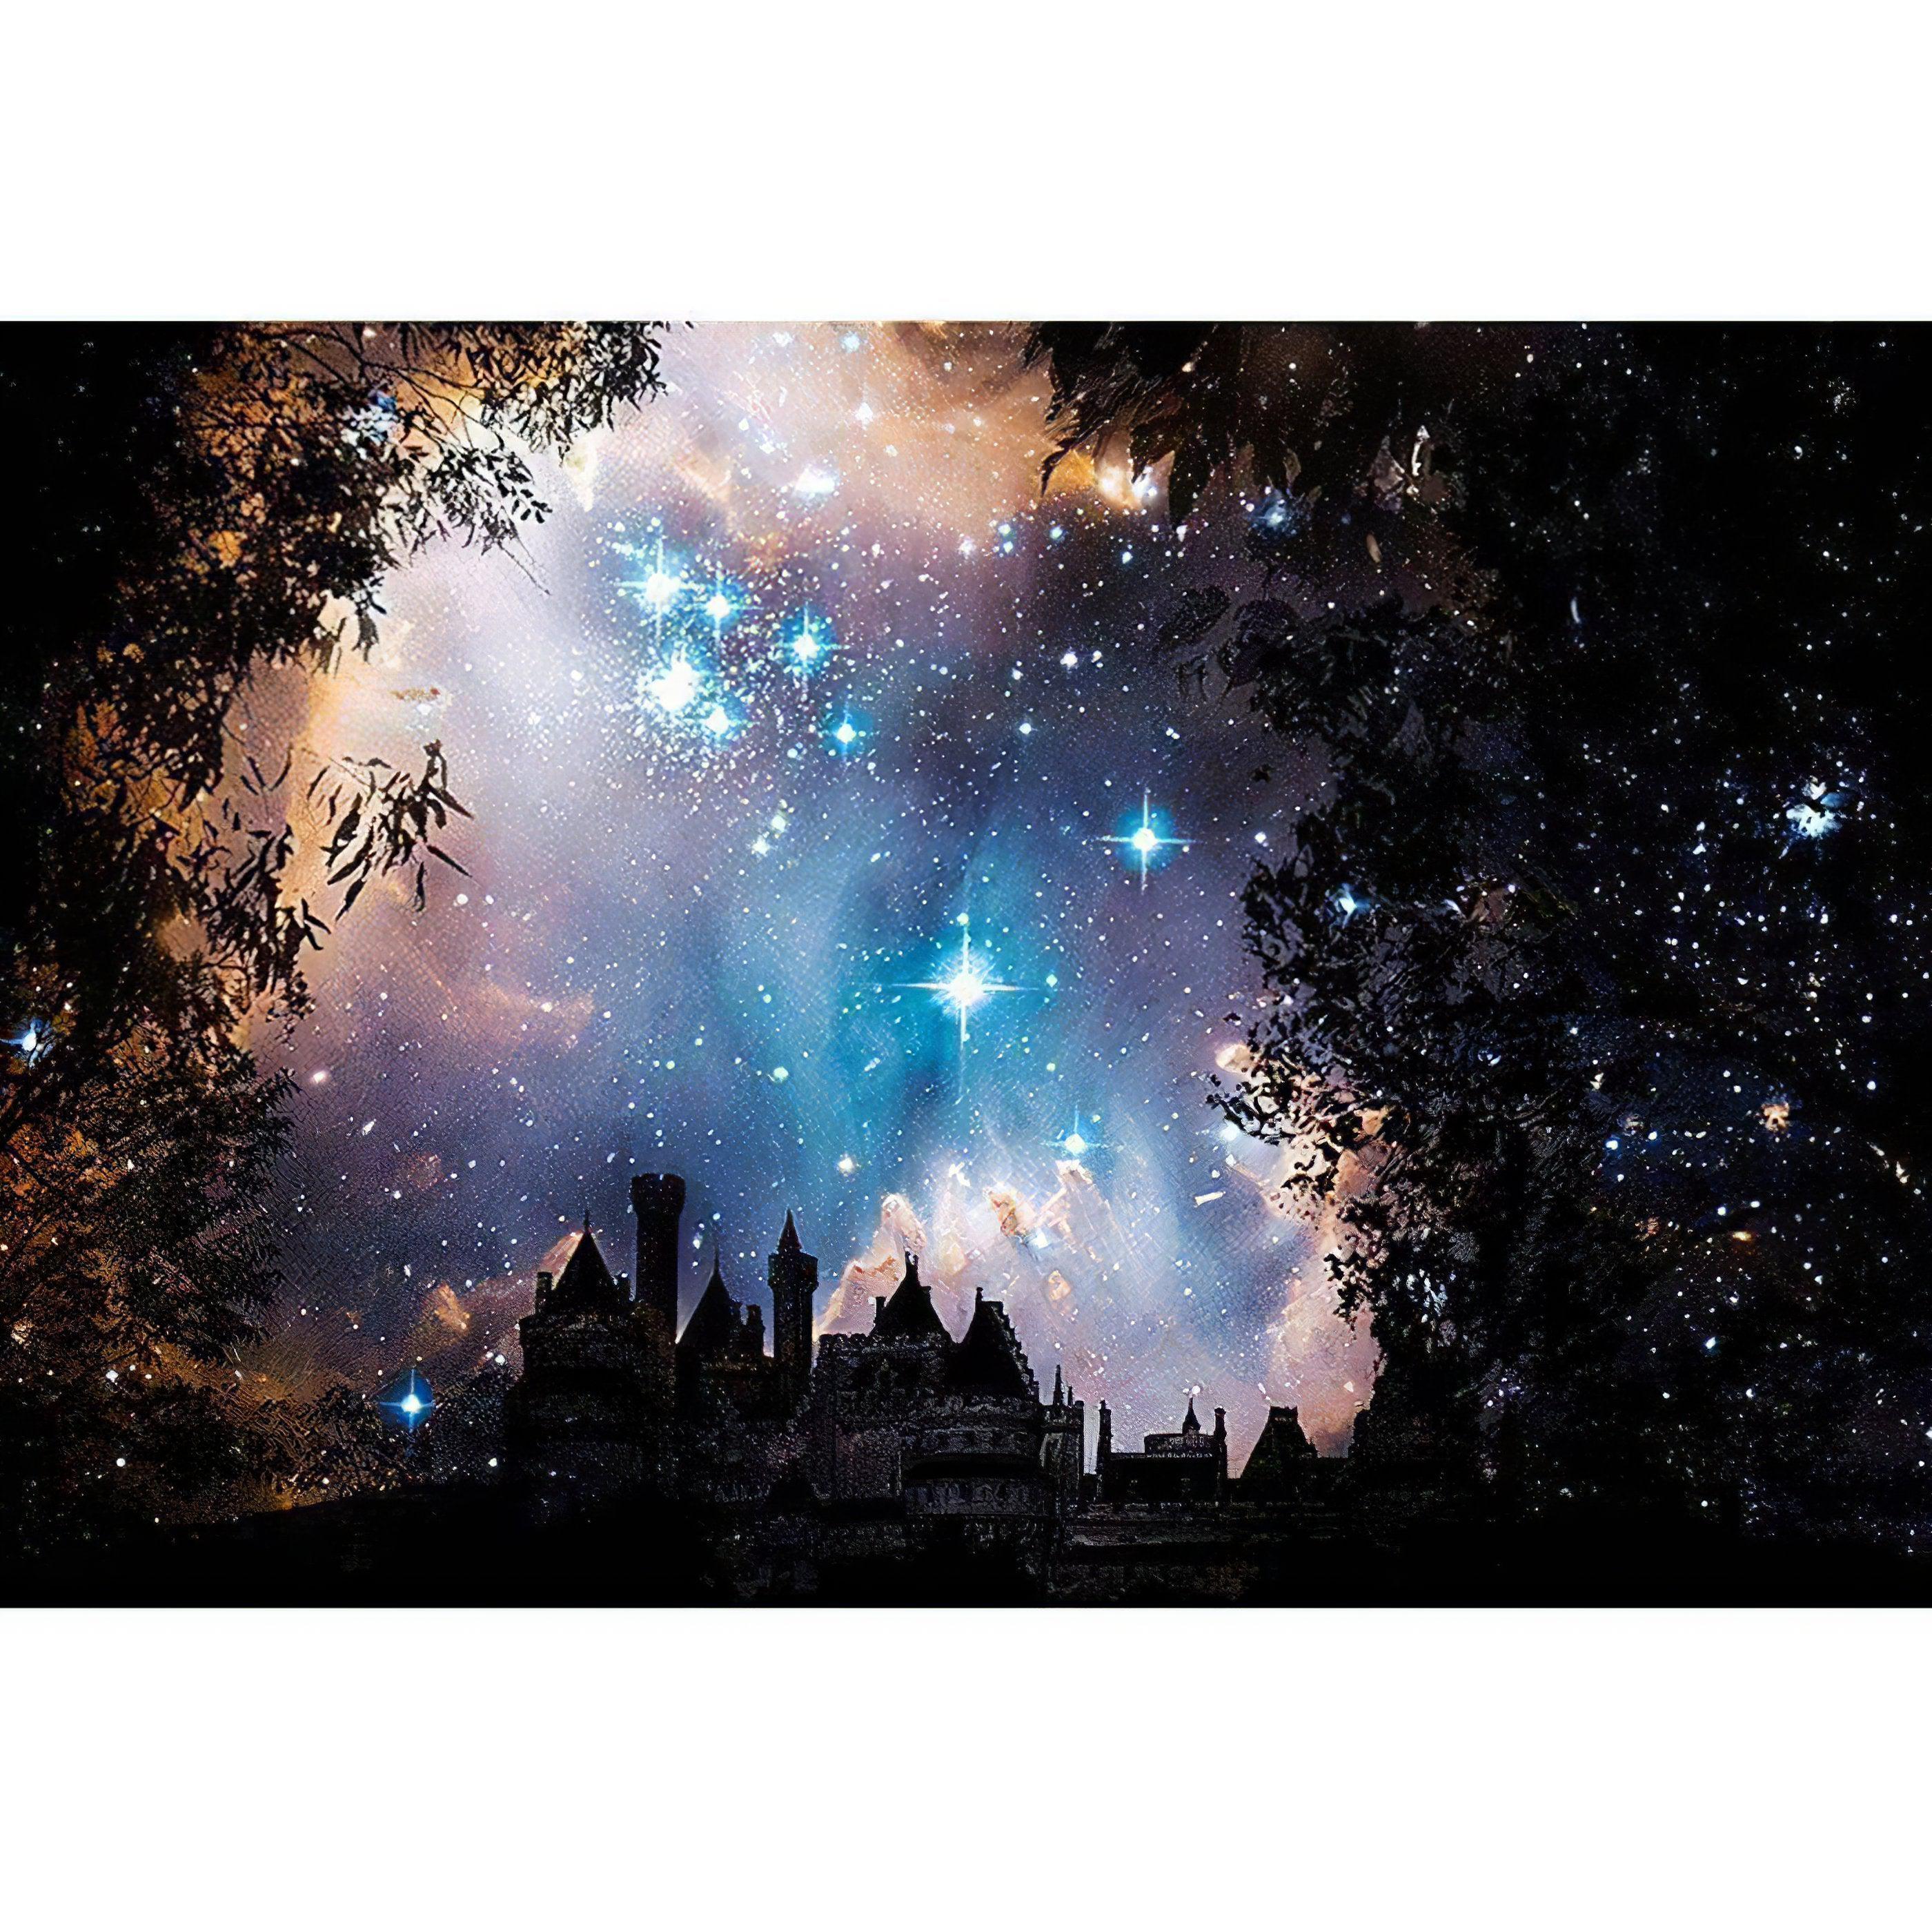 A fantastical merger of medieval grandeur and cosmic wonder, invoking dreams. Castle And Space - Diamondartlove